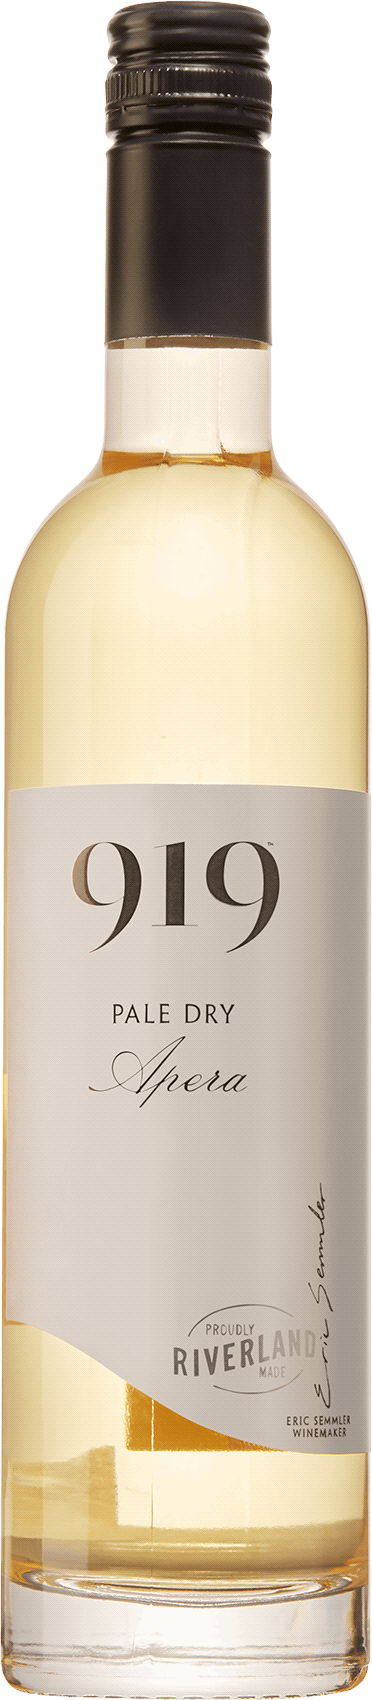 919 Pale Dry Apera